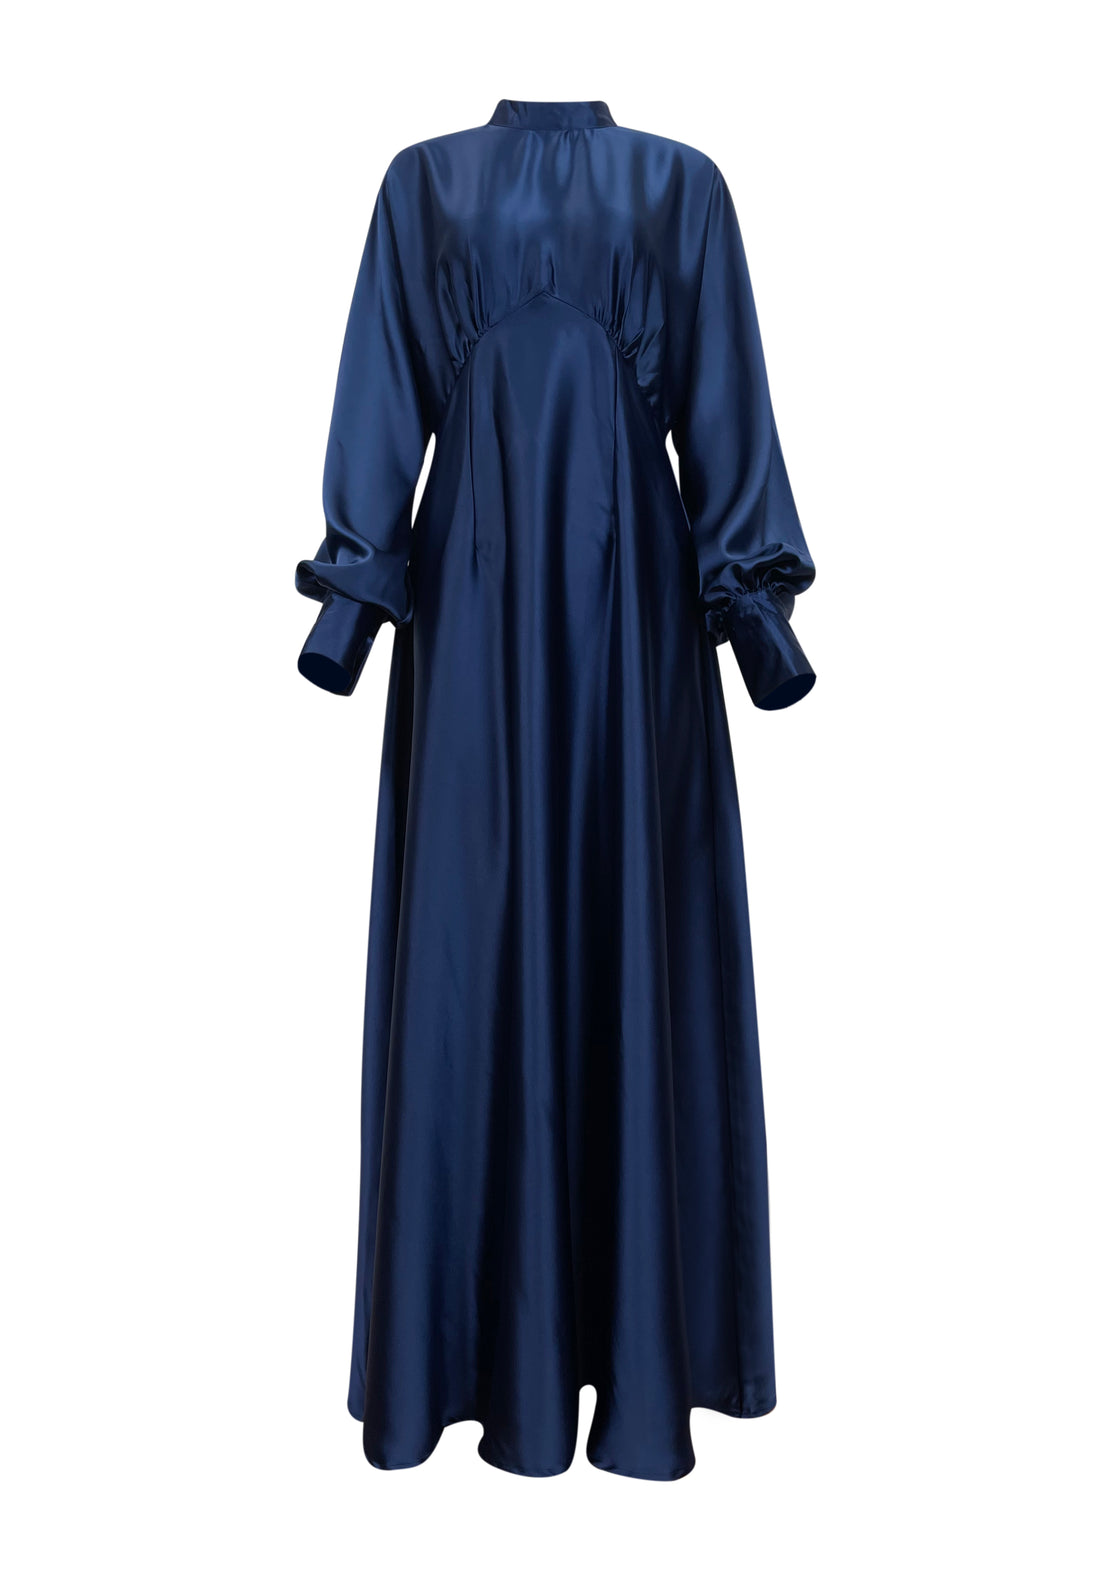 Imelda Batwing Dress - Midnight Blue